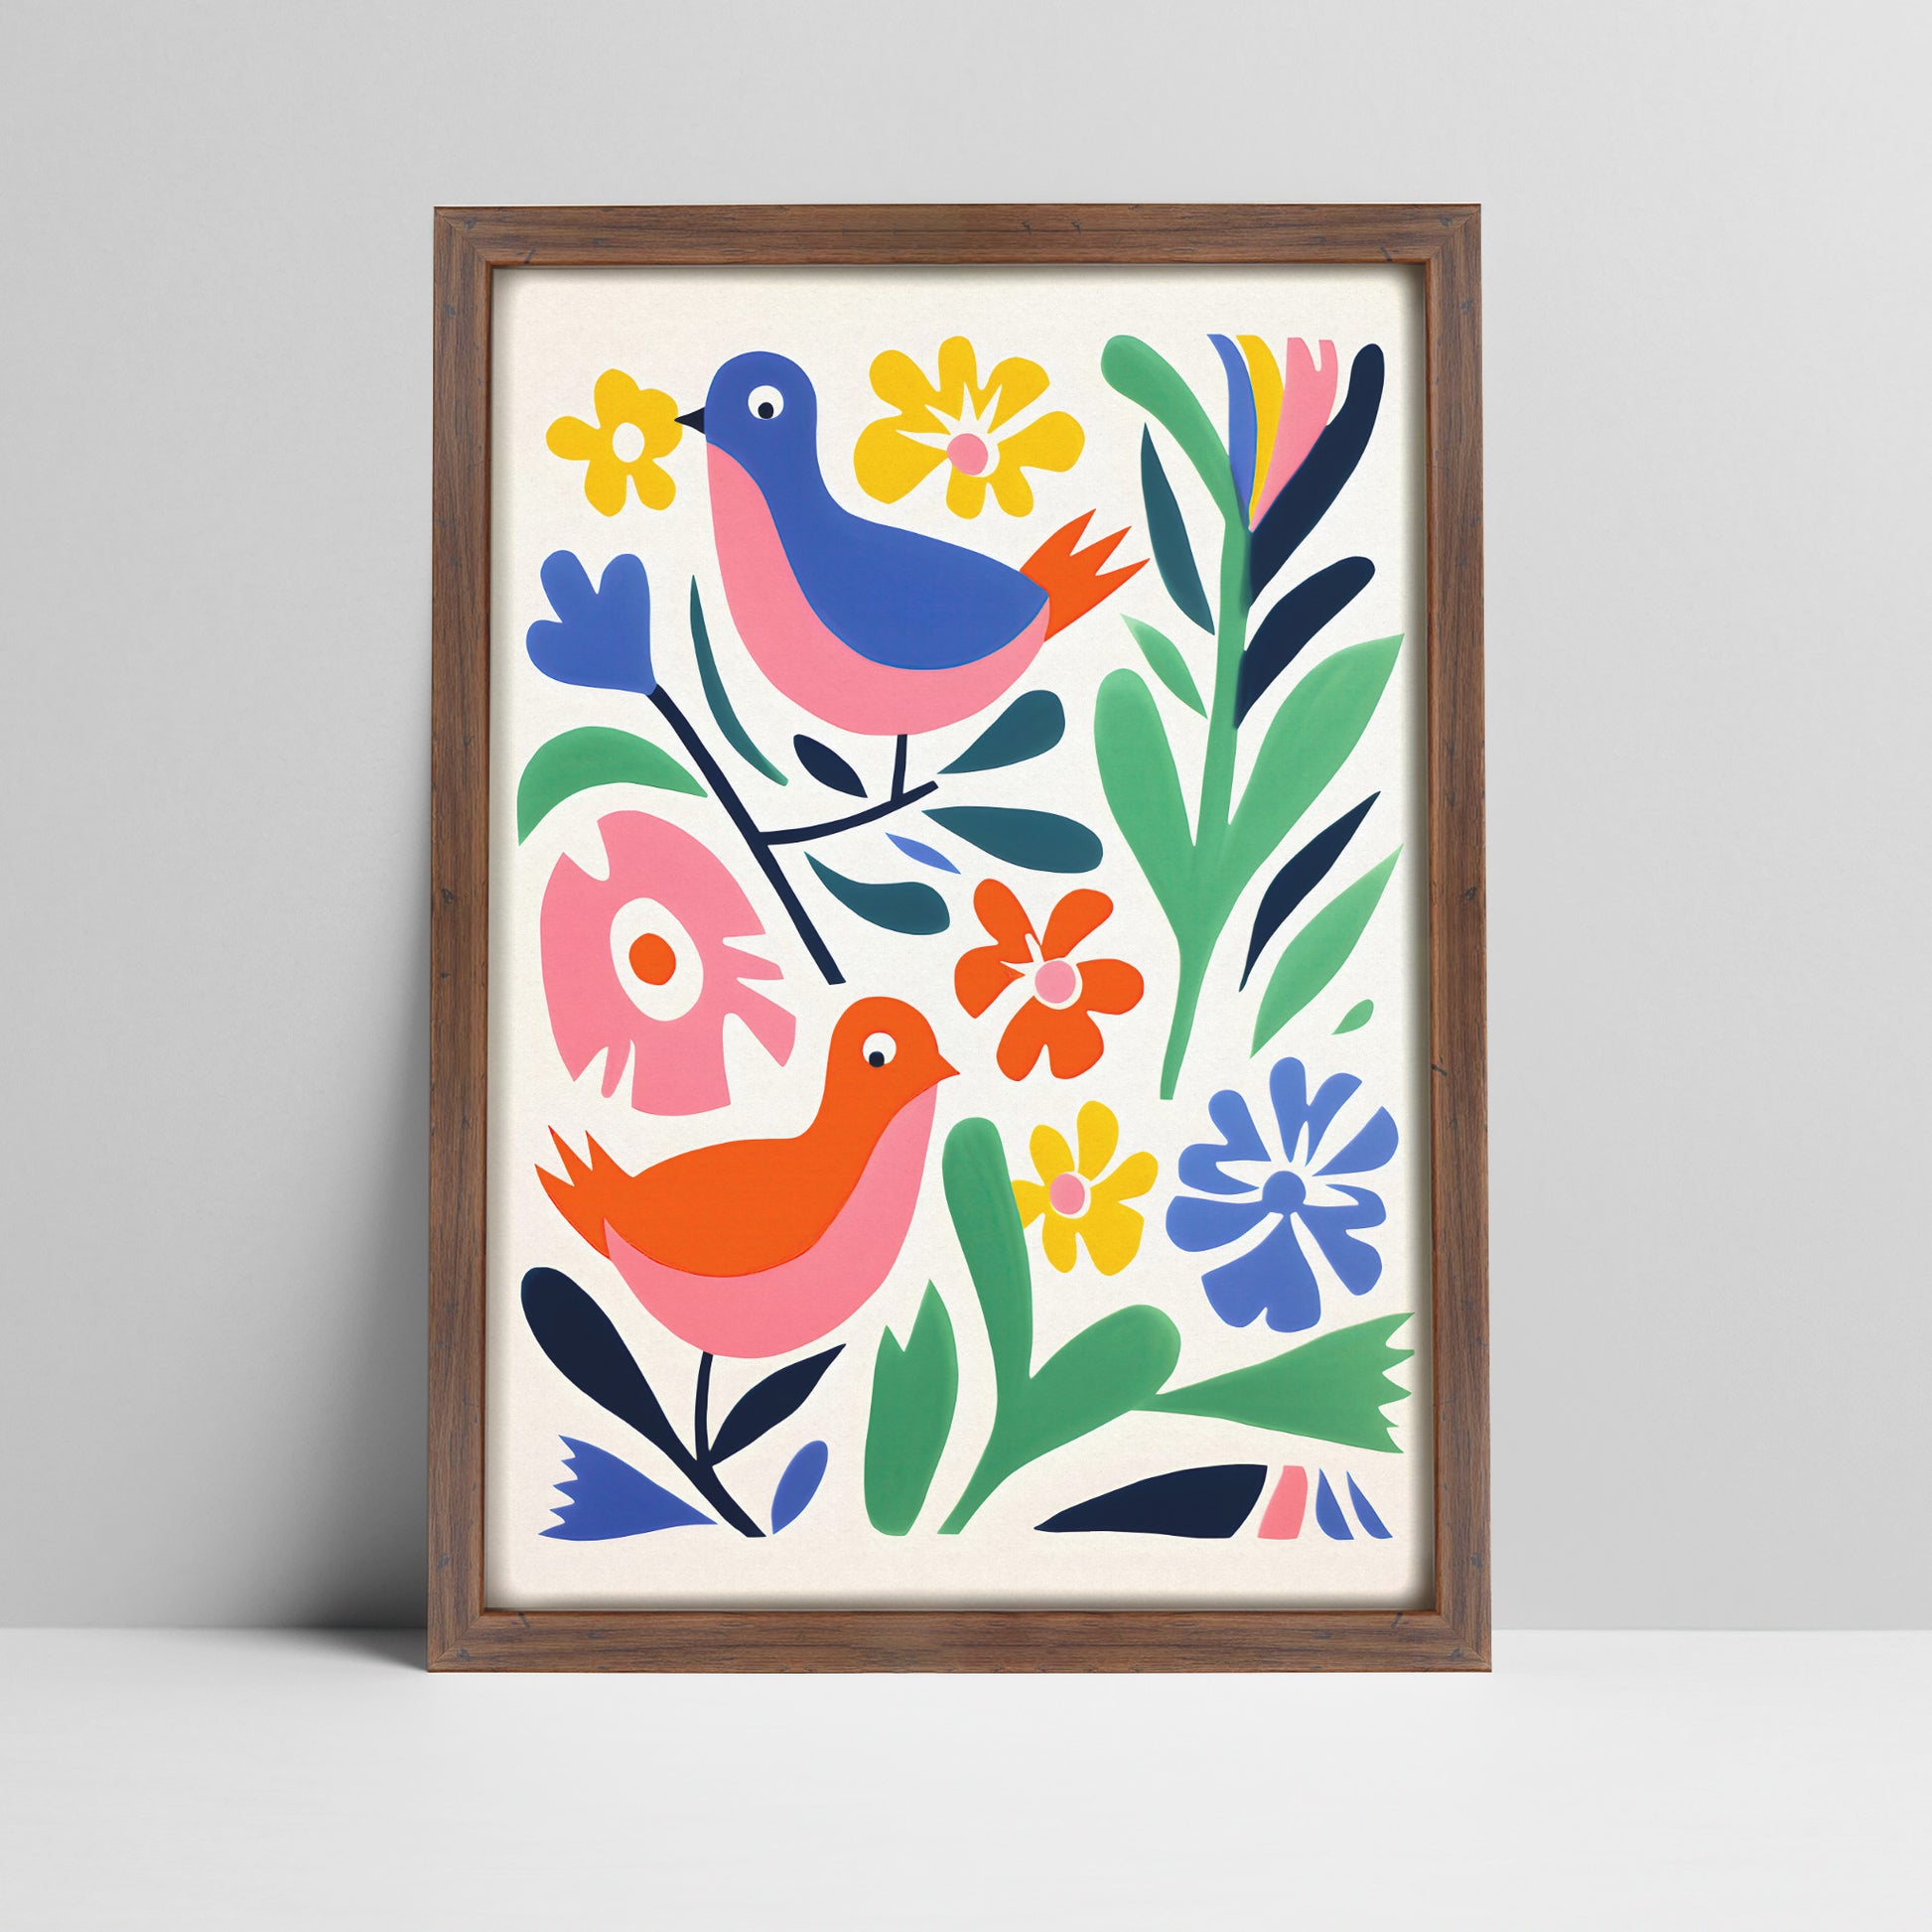 Folk art birds among vibrant flowers print in a dark wood frame